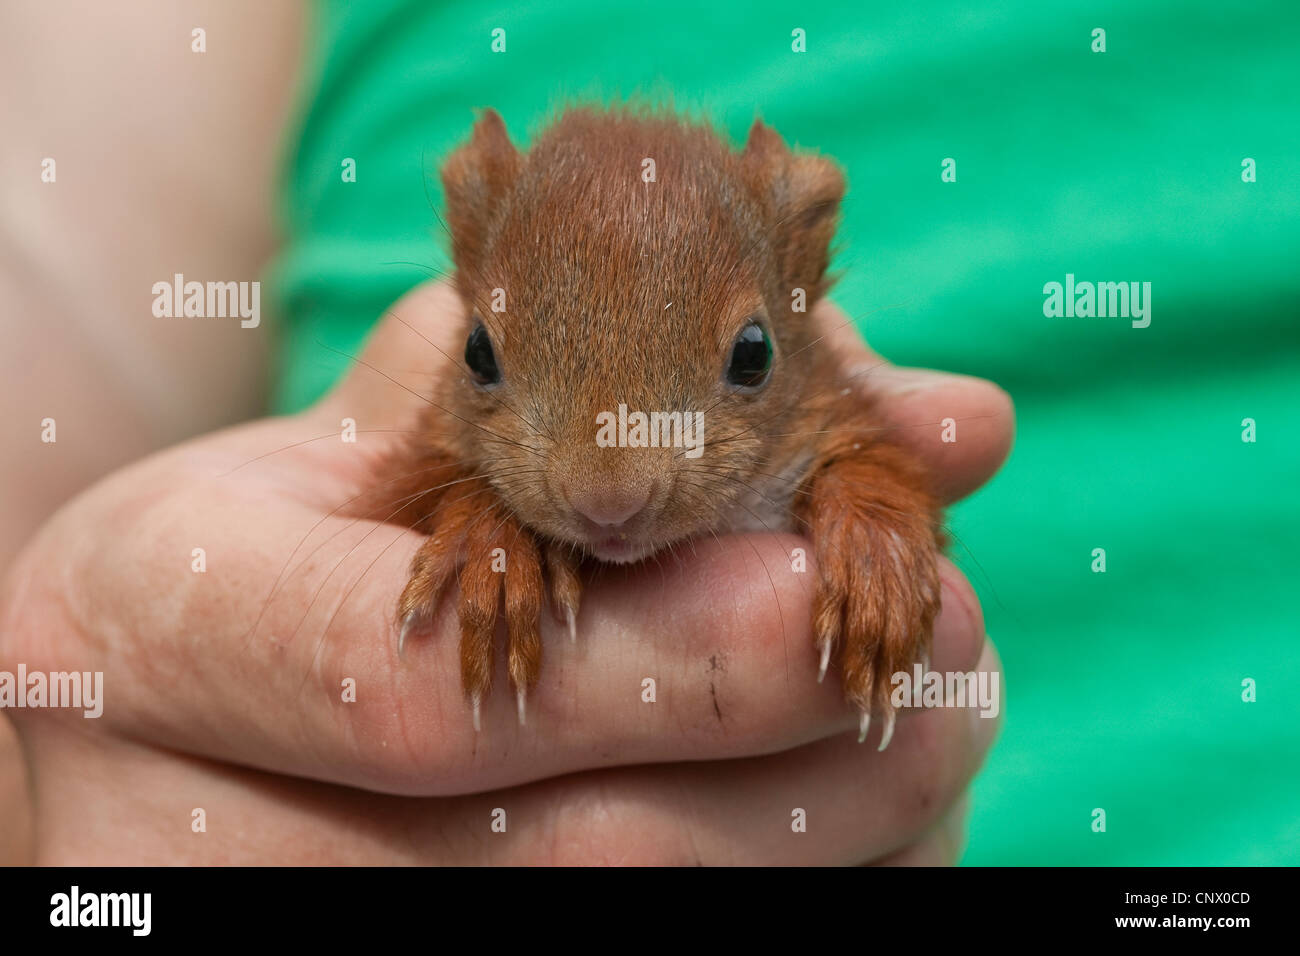 European red squirrel, Eurasian red squirrel (Sciurus vulgaris), orphaned pup sitting on hands, Germany Stock Photo